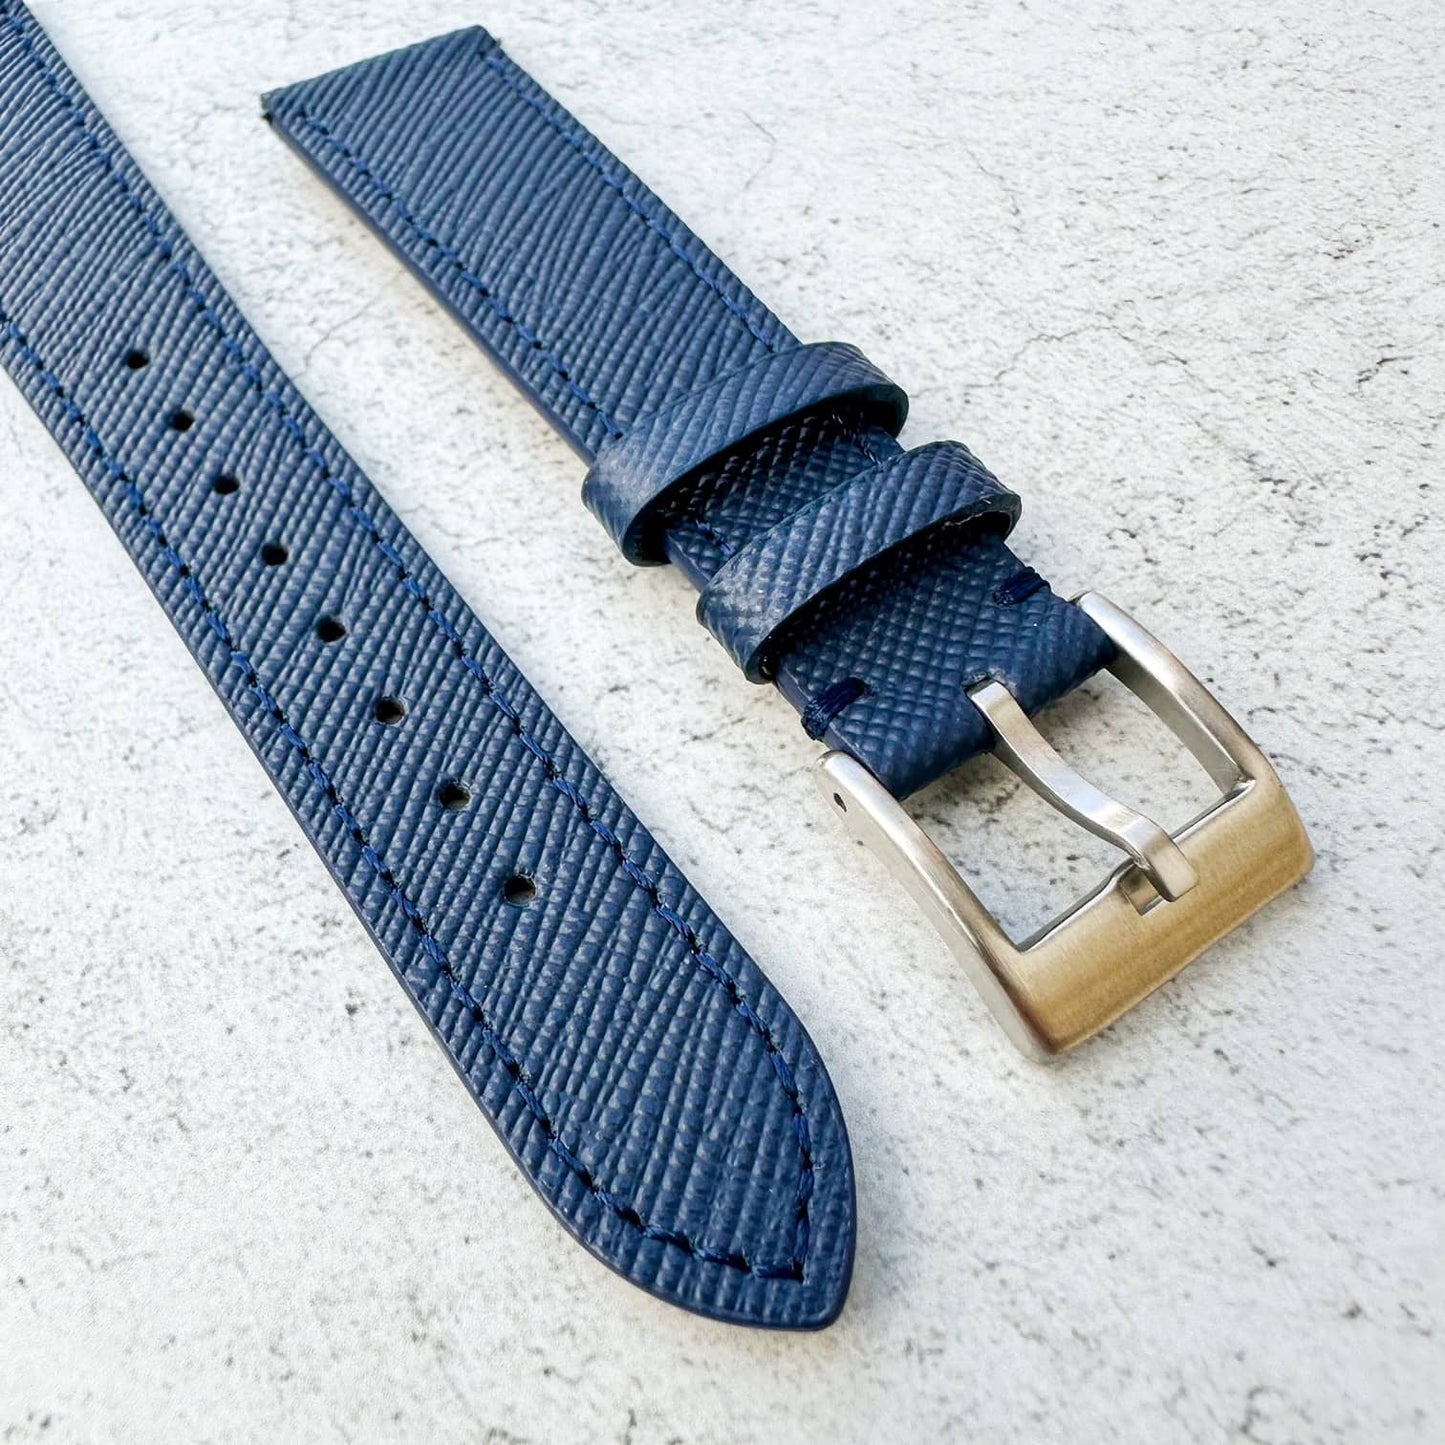 Top Grain Quick Release Genuine Leather Watch Strap Blue 4